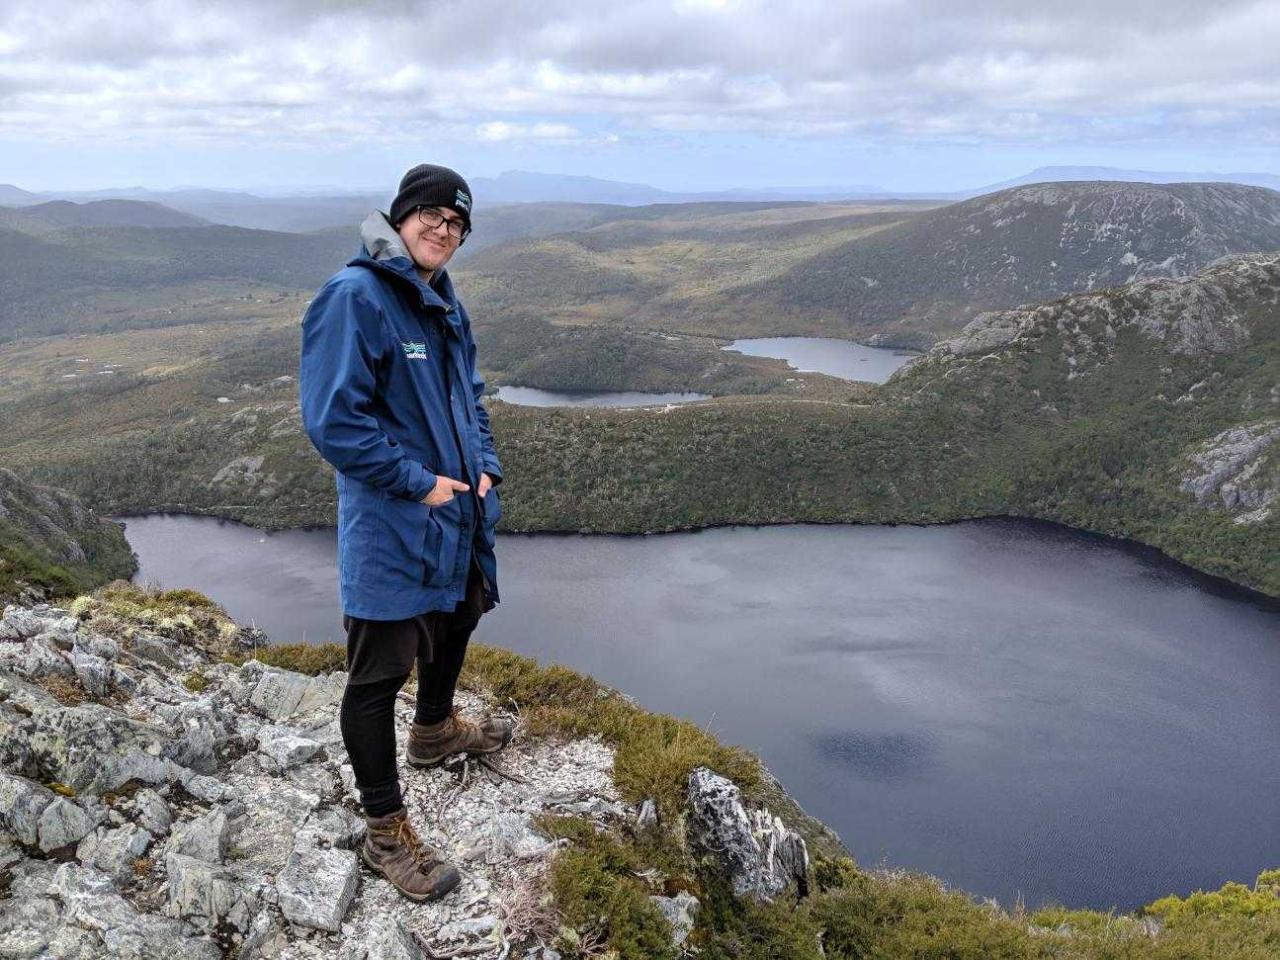 wulinantikala / Cradle Mountain - lutruwita / Tasmania - 4 Days